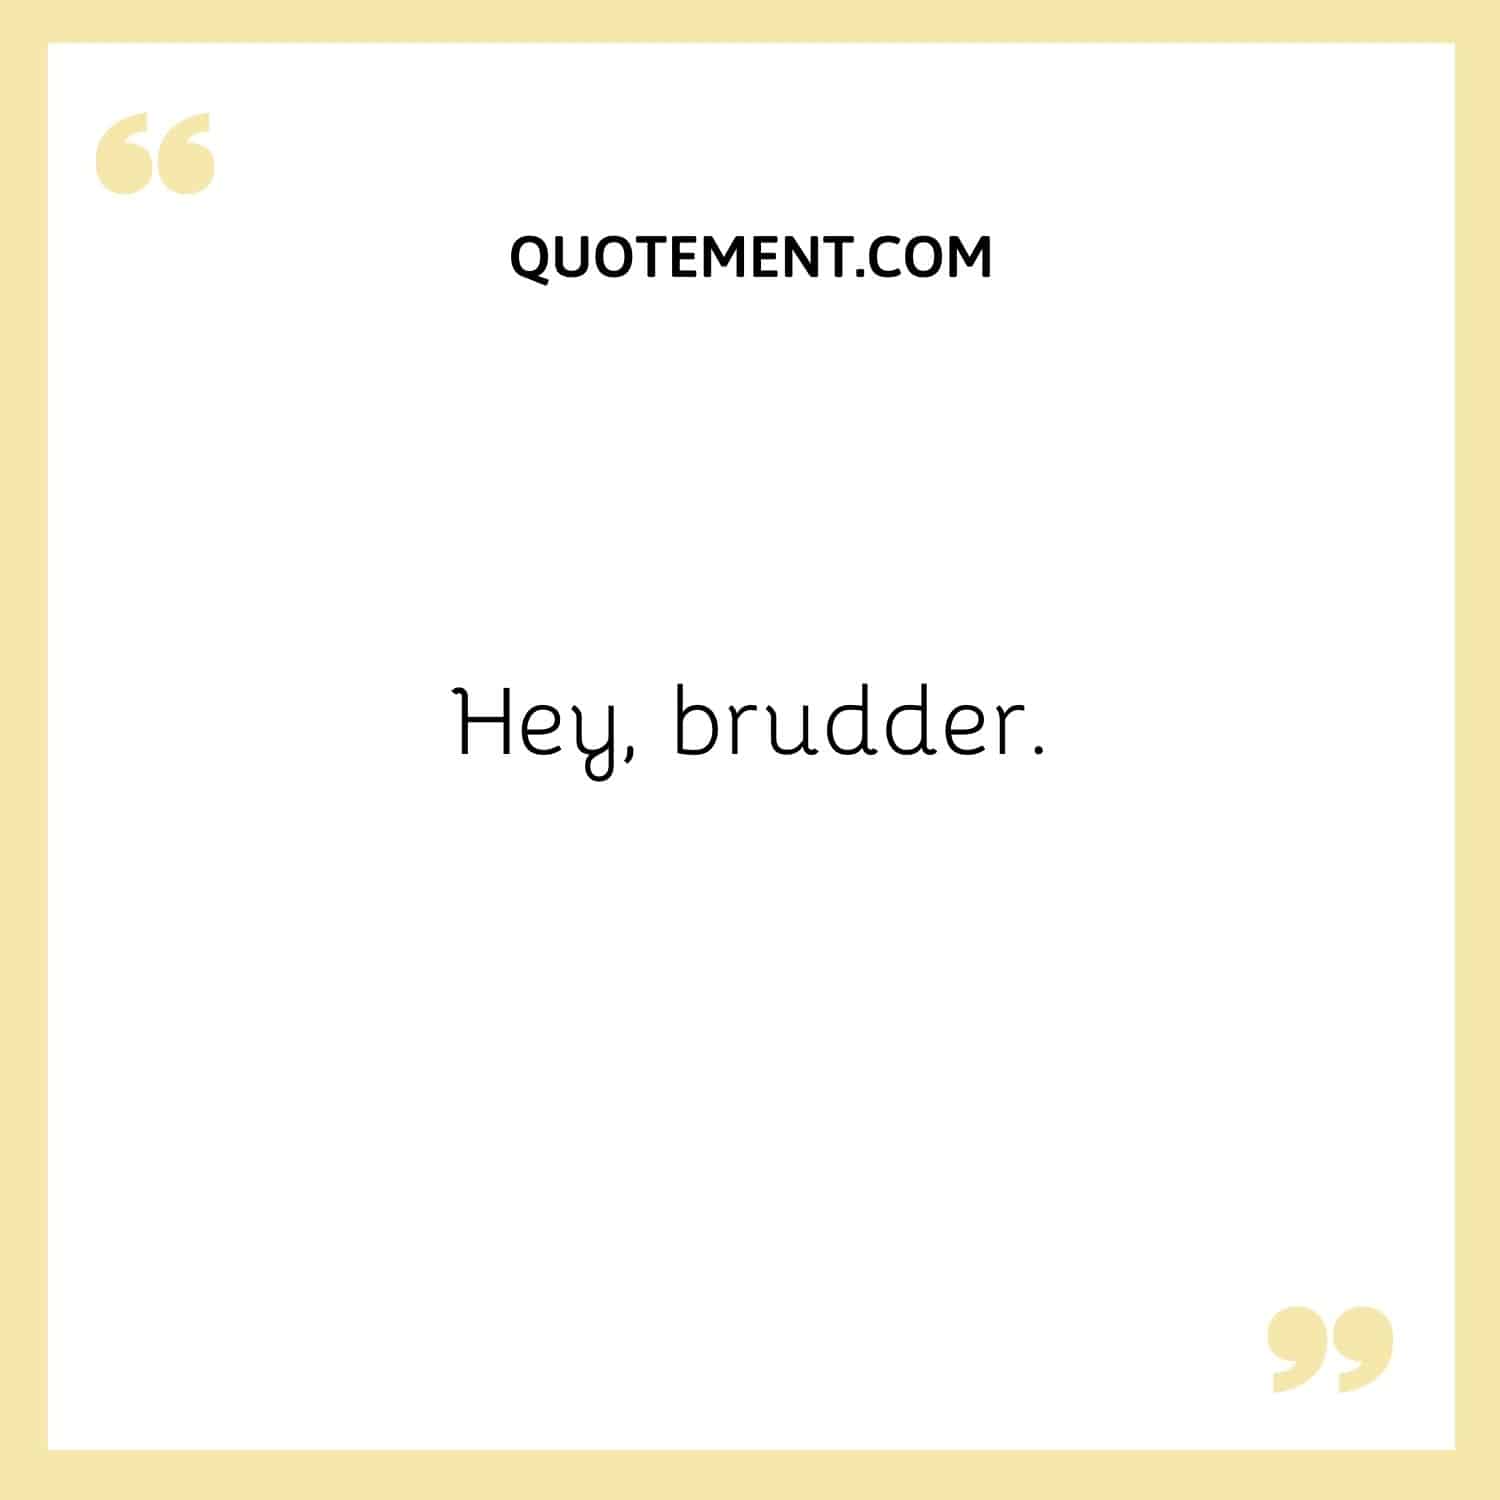 Hey, brudder